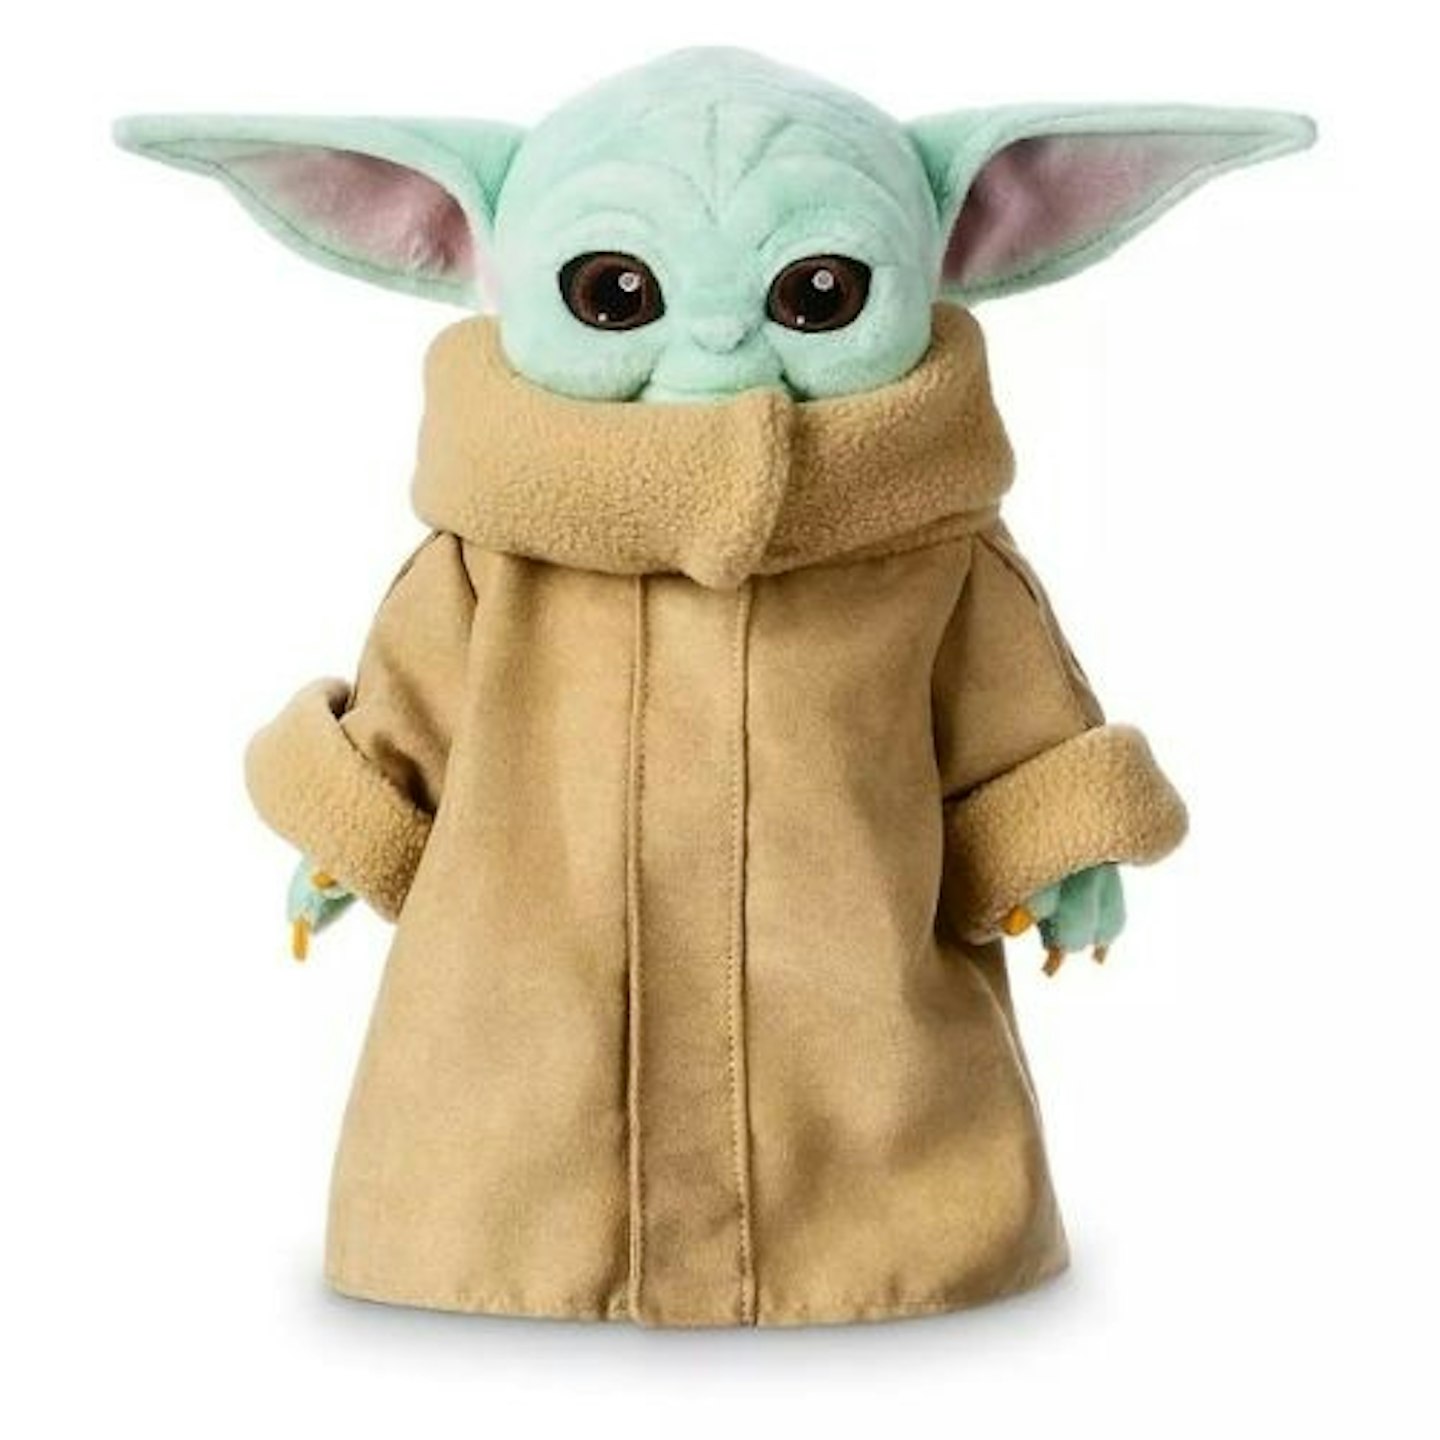 Disney Grogu Small Soft Toy, Star Wars: The Mandalorian